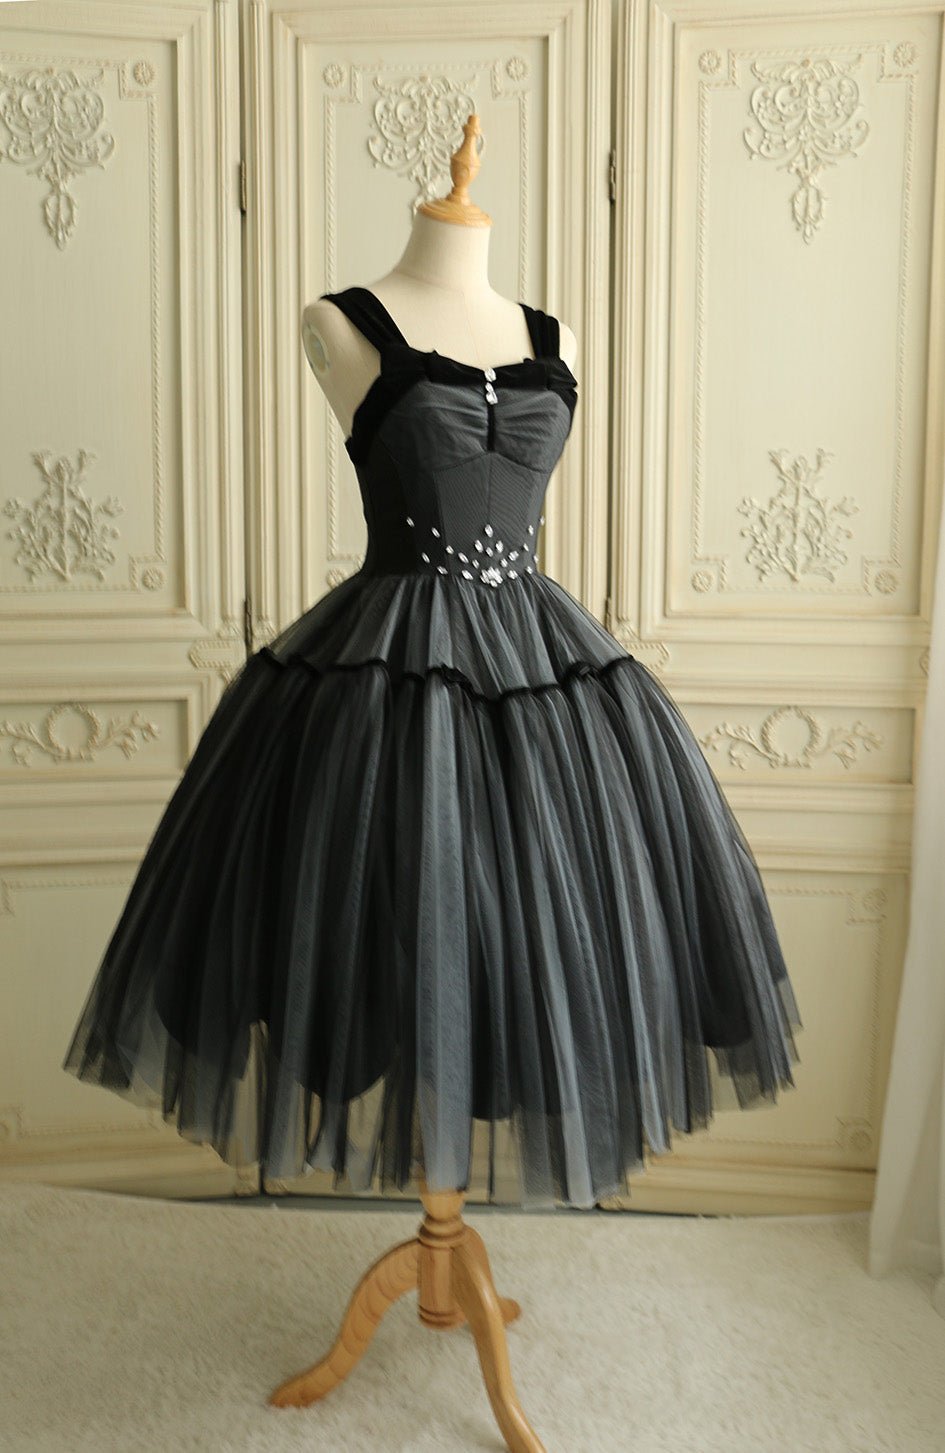 Grey and Black Gothic Lolita Tea Dress - Vintage Inspired - WonderlandByLilian